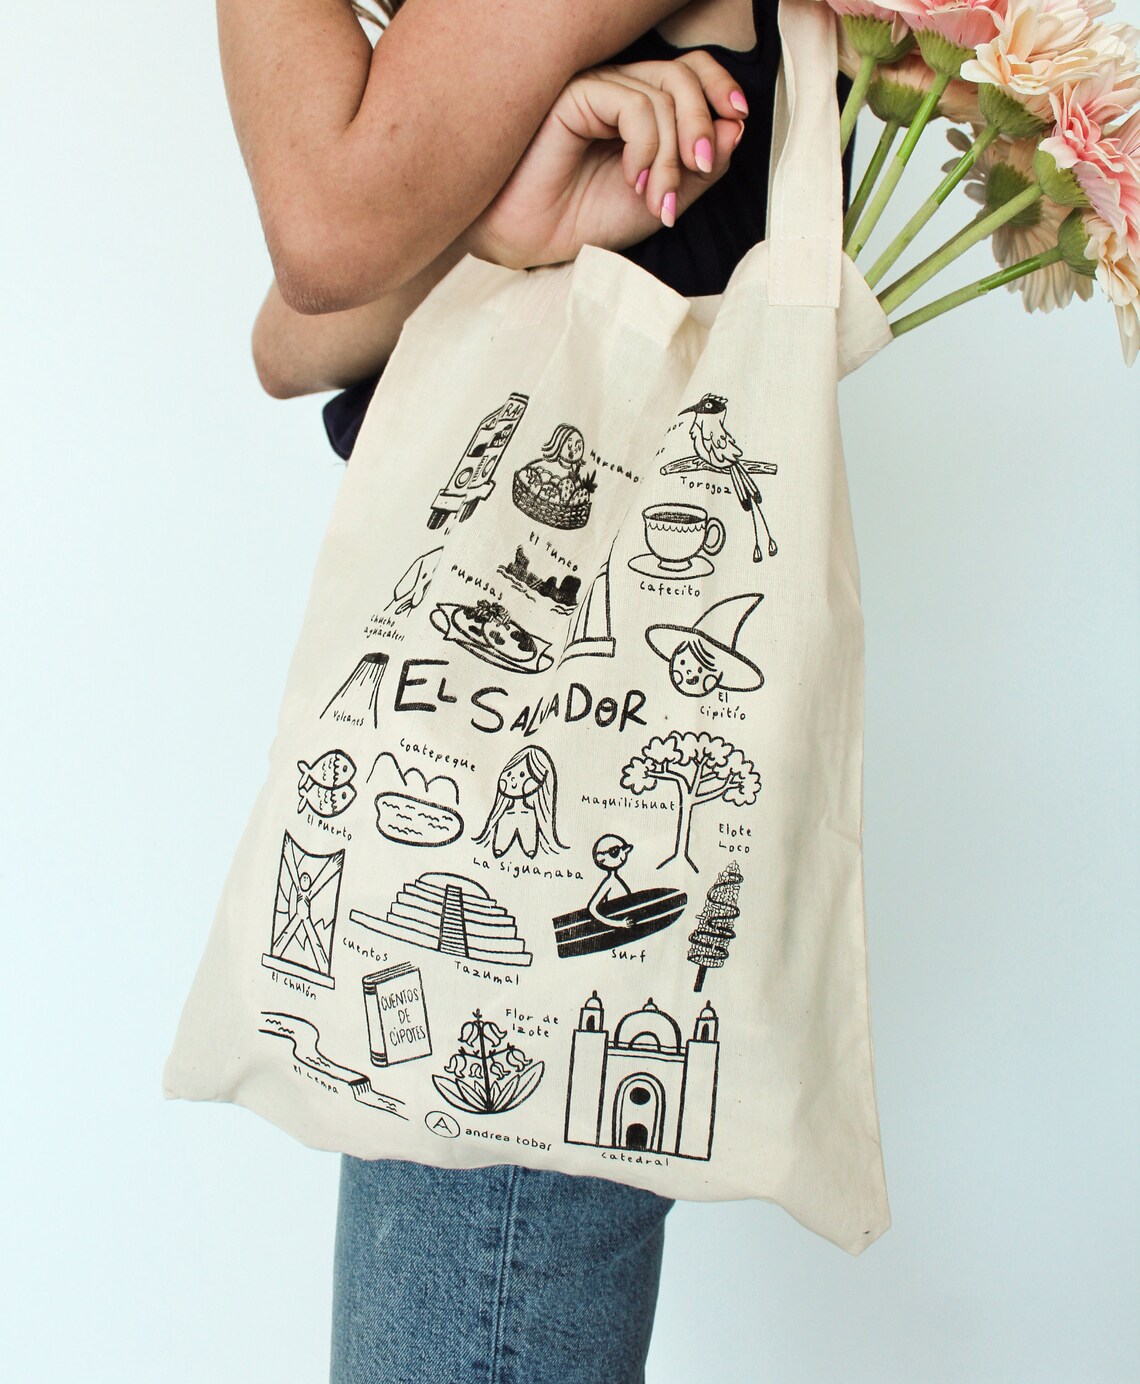 El Salvador Tote Bag eco friendly bag sopping bag groceries | Etsy